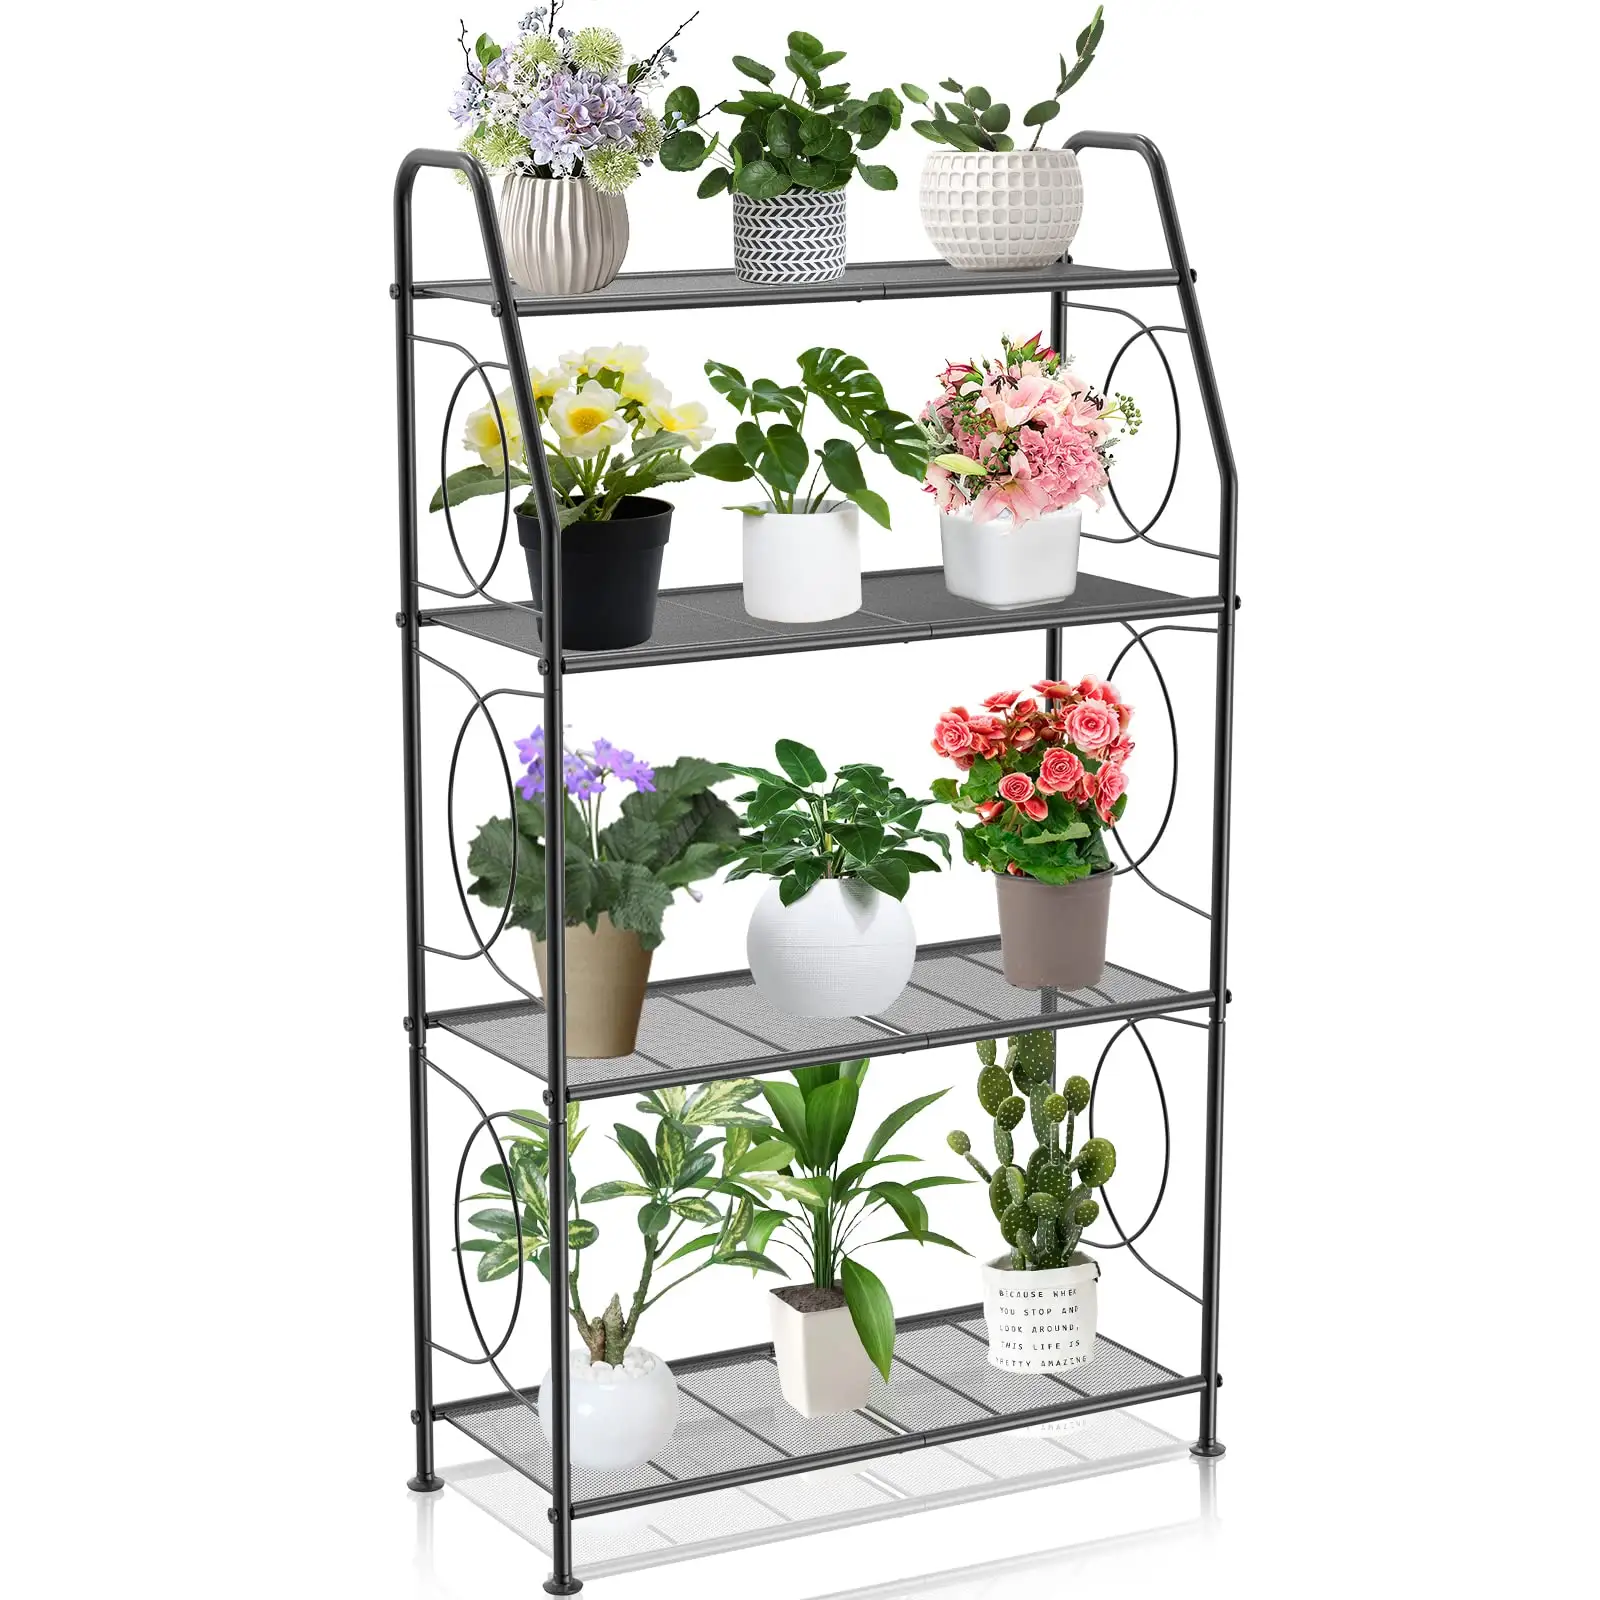 Hot sales high quality metal plant stand holder 3 tier plant shelf for indoor outdoor rack for garden living room